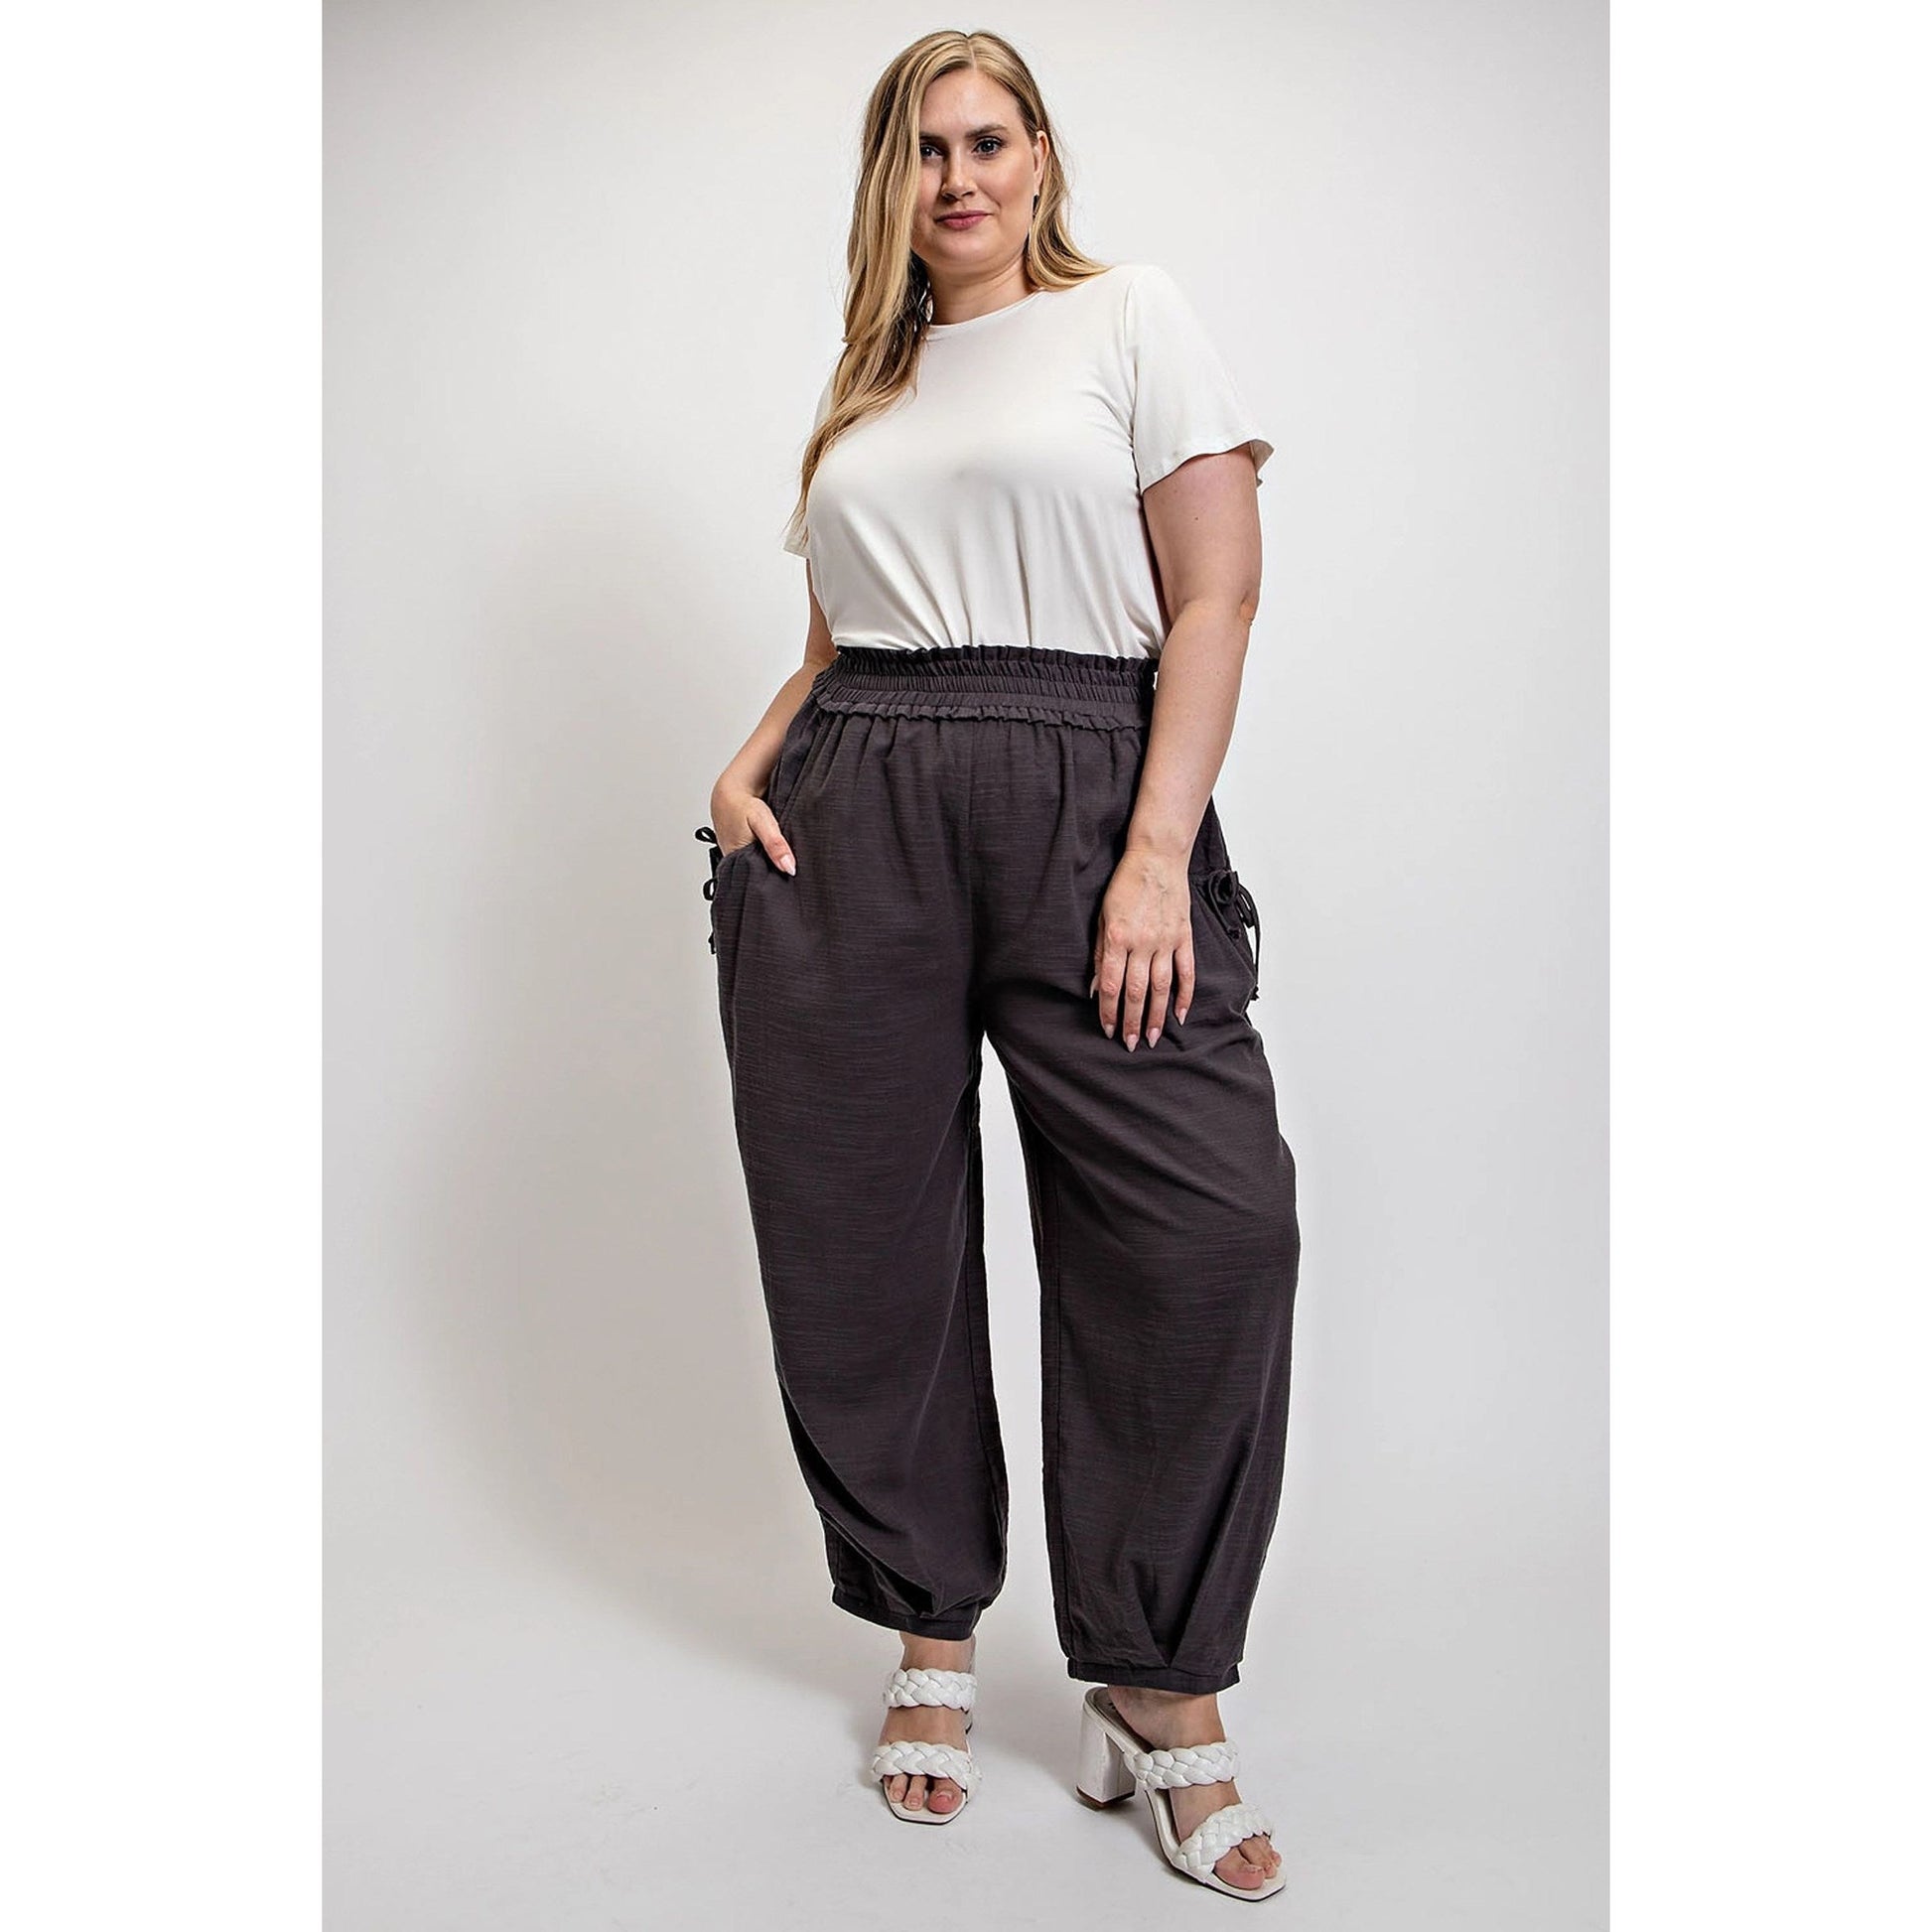 Ramona Cotton Pants With Side Pocket - Rhapsody and Renascence -Pants - boho, cotton, misses, pants, plus, plus size